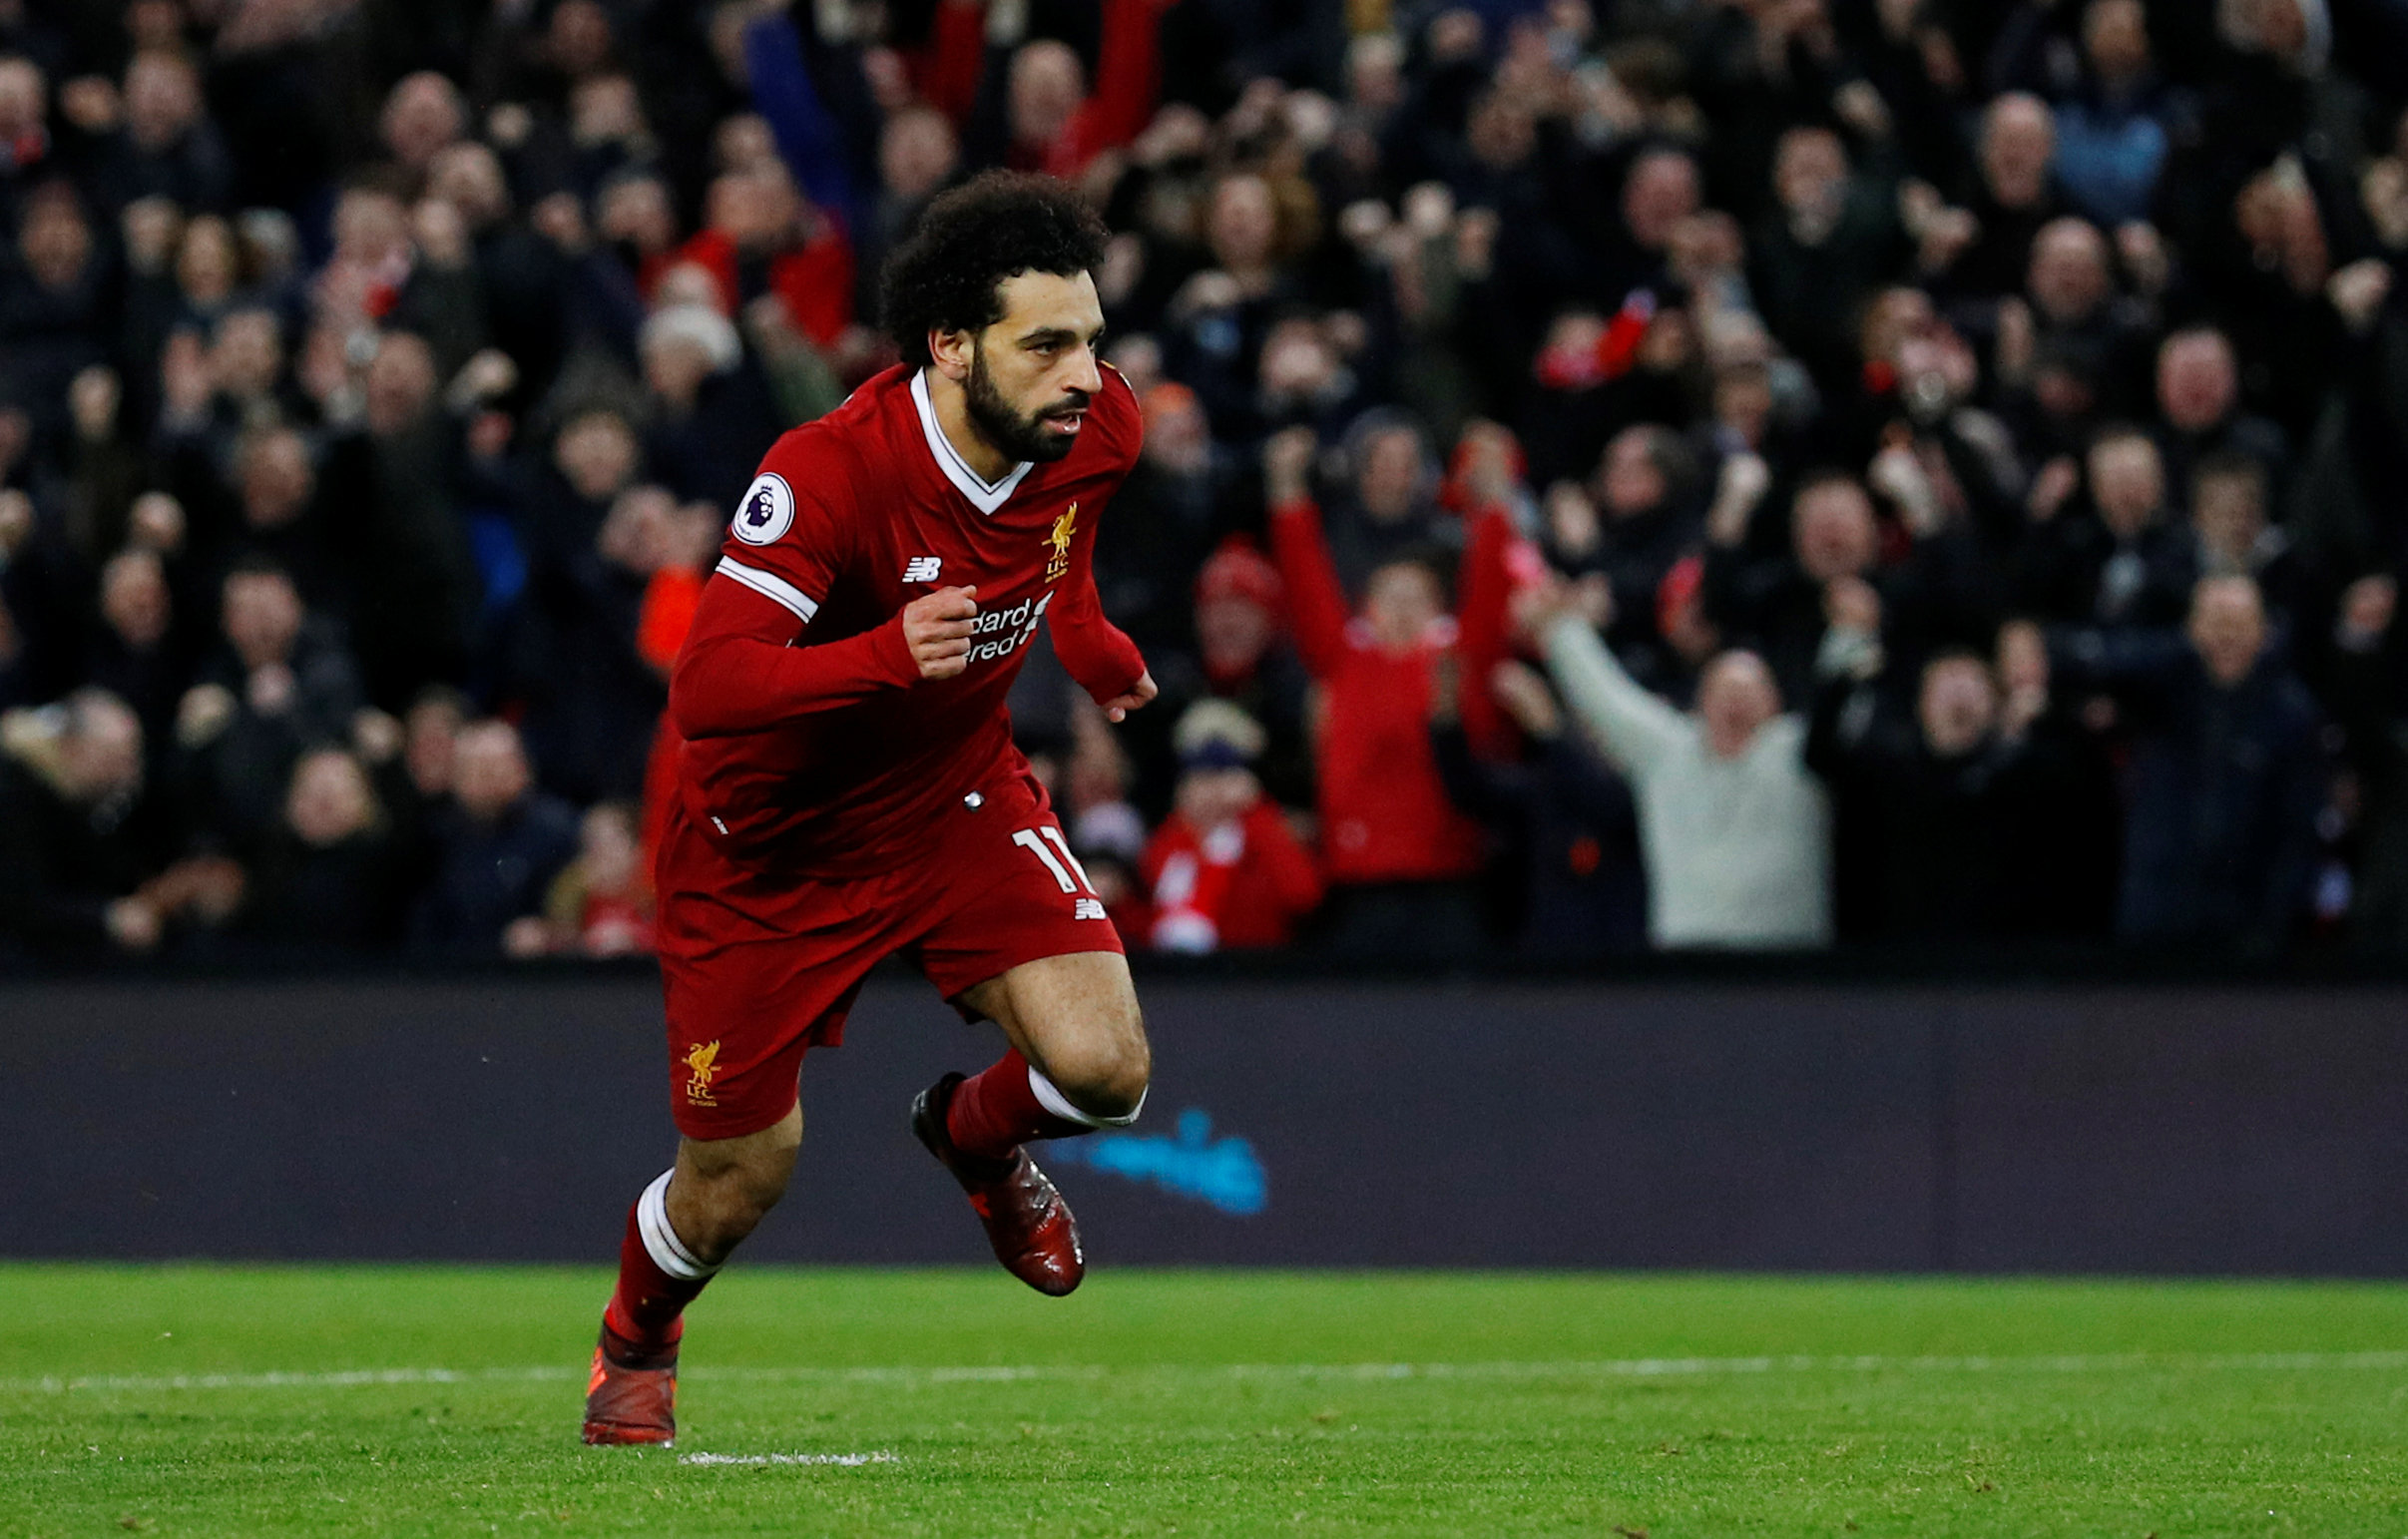 Football: Klopp backs Salah to maintain scoring form